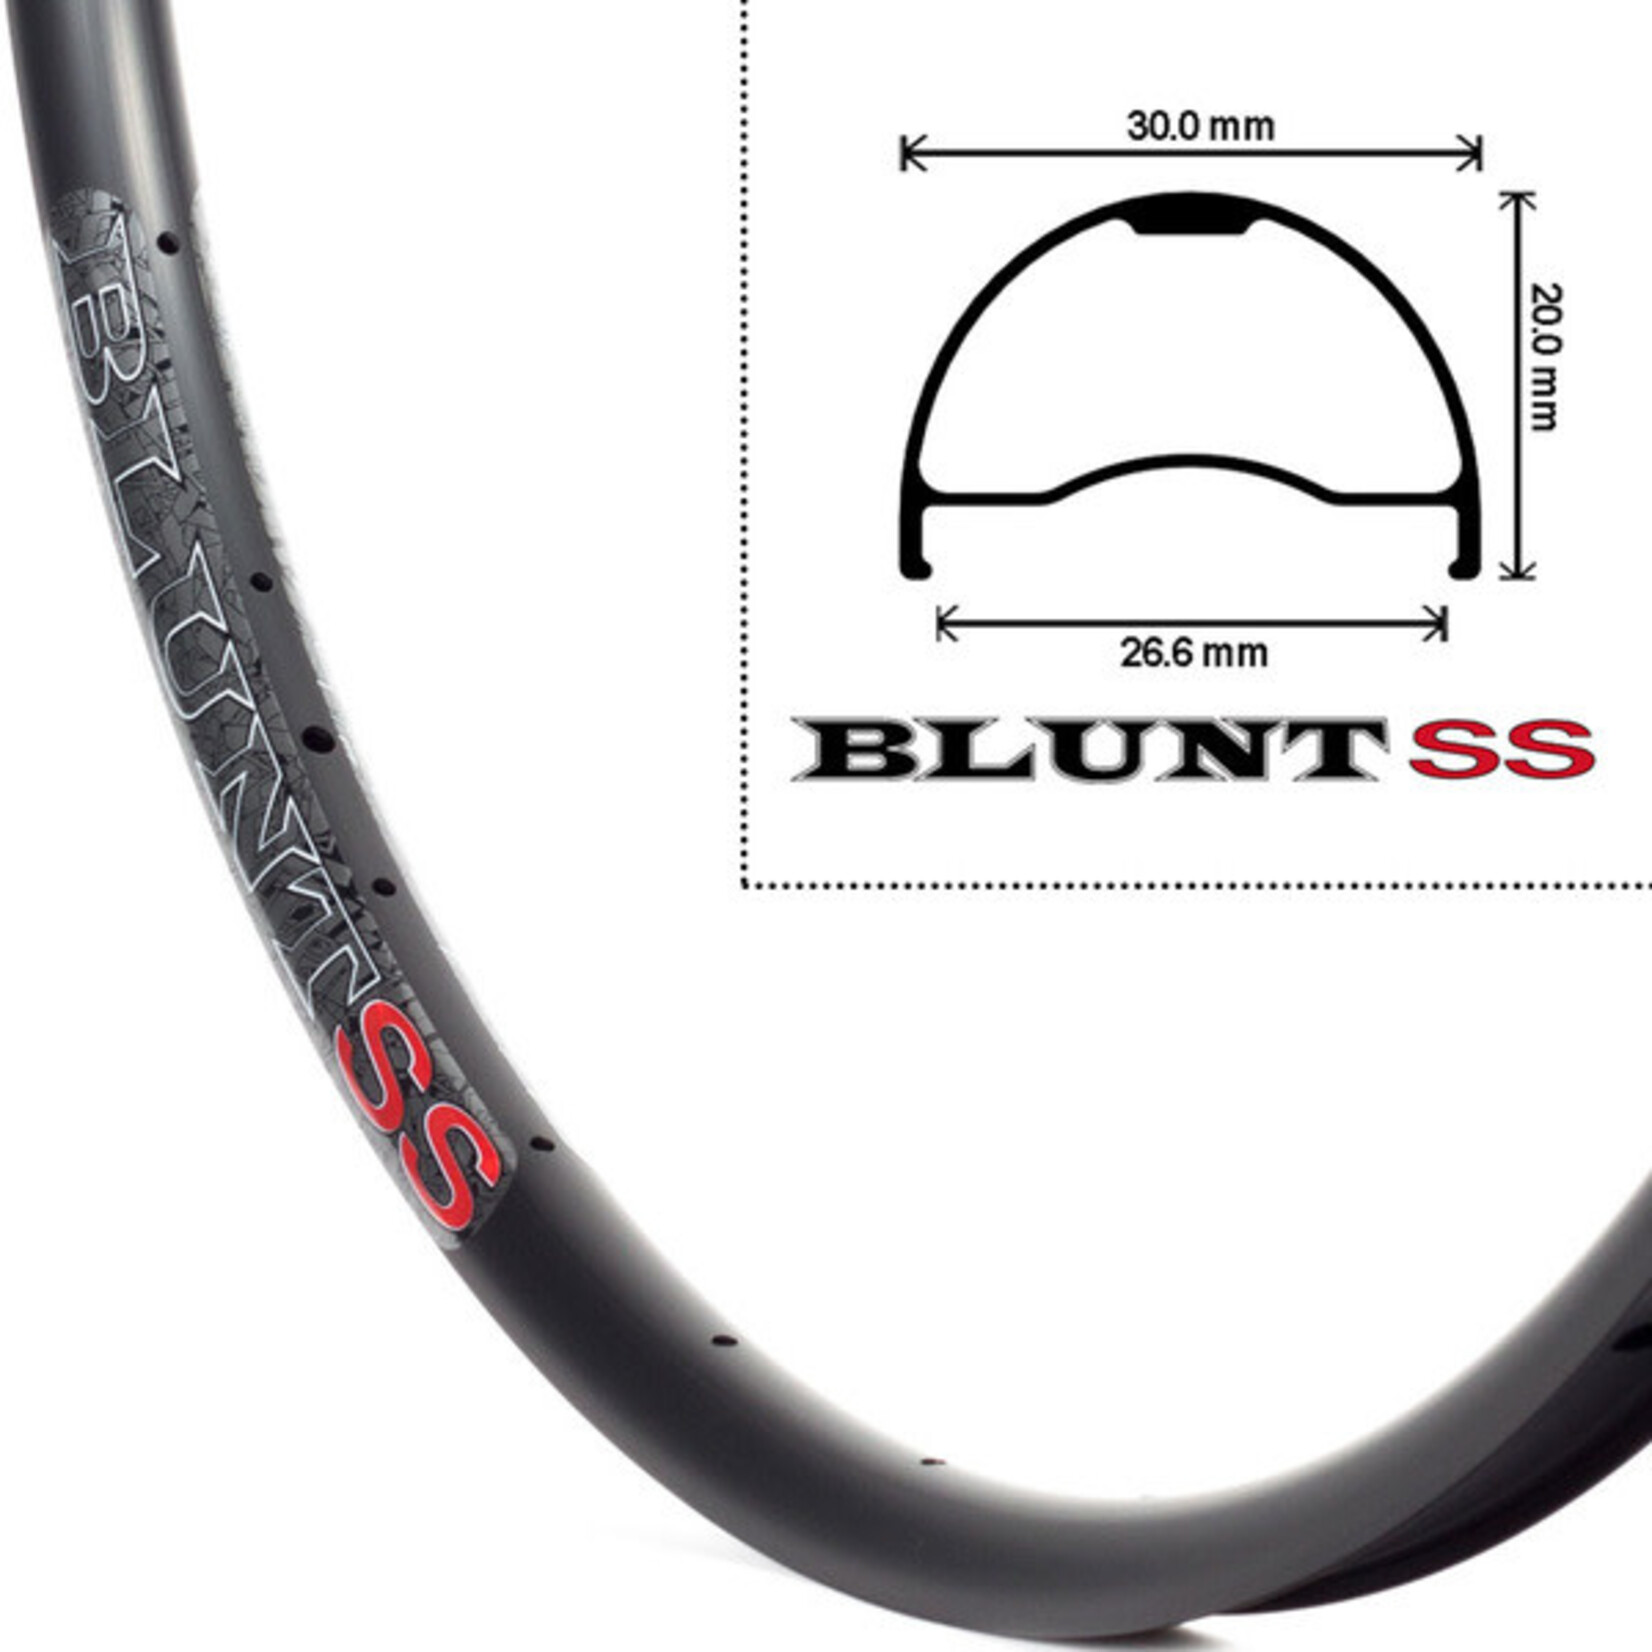 Velocity Velocity Blunt SS 650b  Bicycle Rims - Black,28